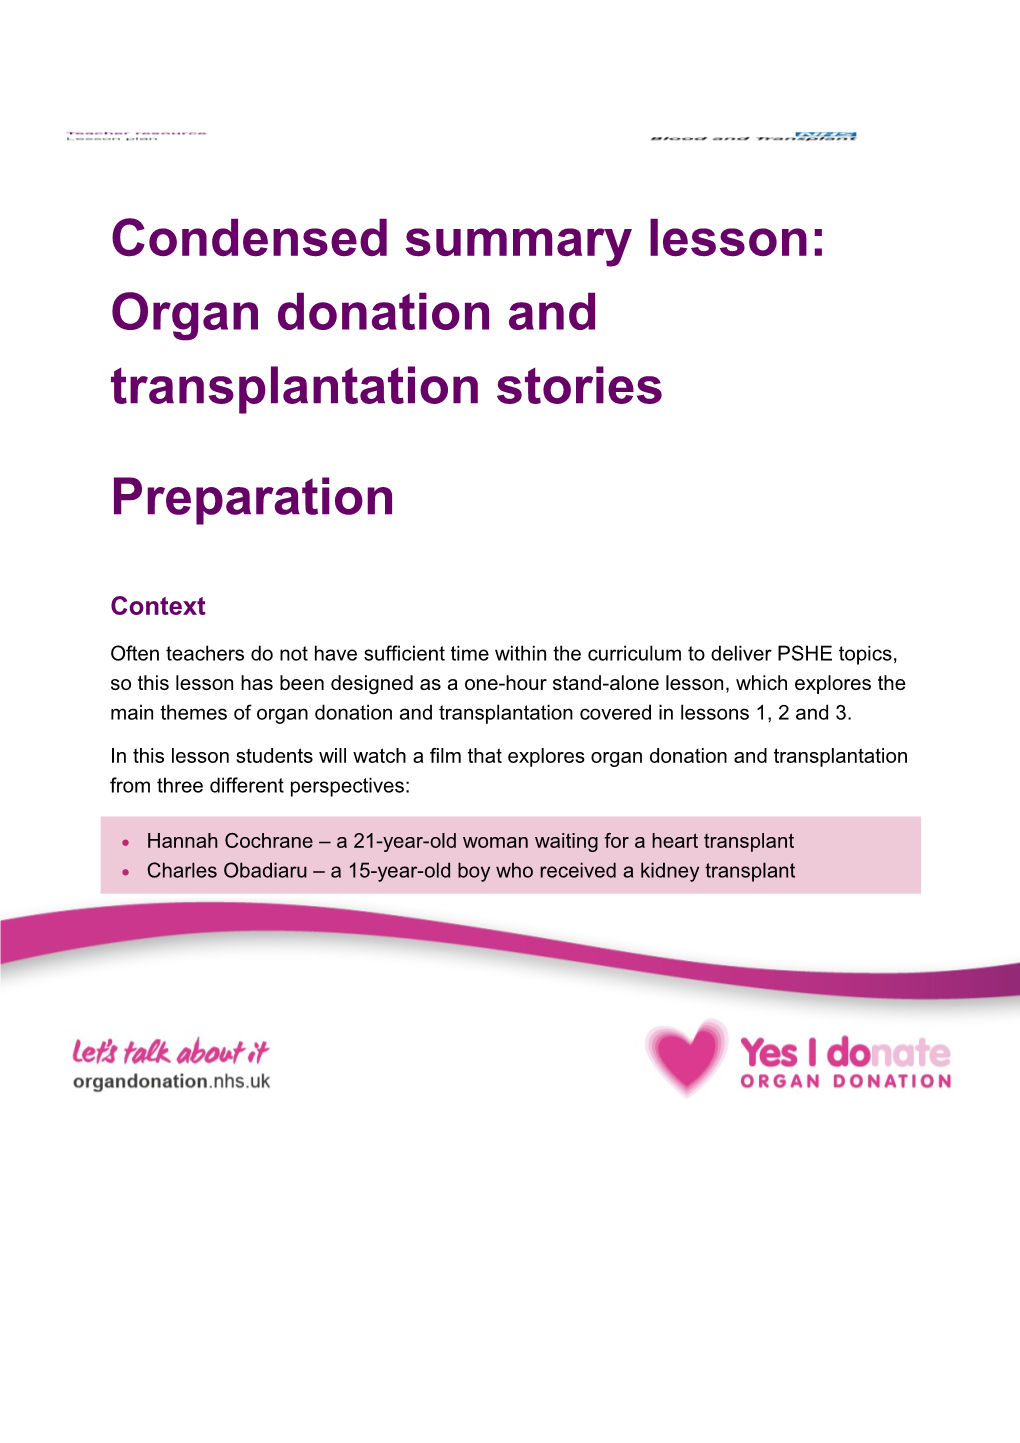 Condensed Summary Lesson: Organ Donation and Transplantation Stories